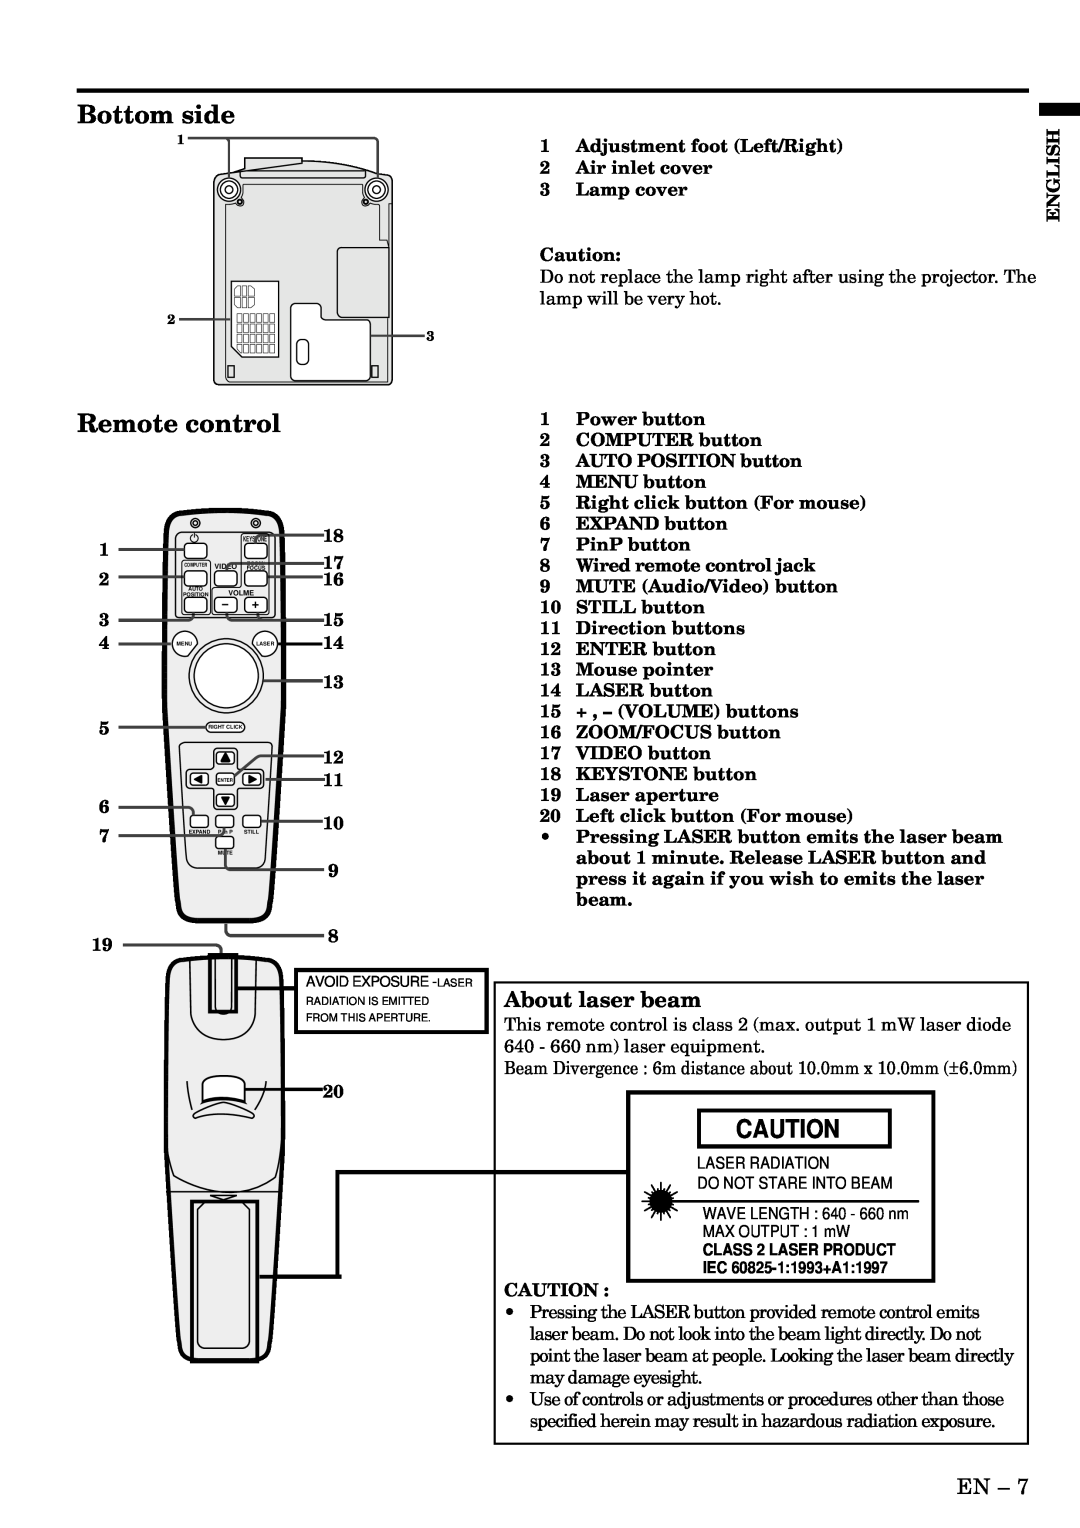 Mitsubishi Electronics X500U user manual Bottom side, Remote control, About laser beam, Adjustment foot Left/Right, English 